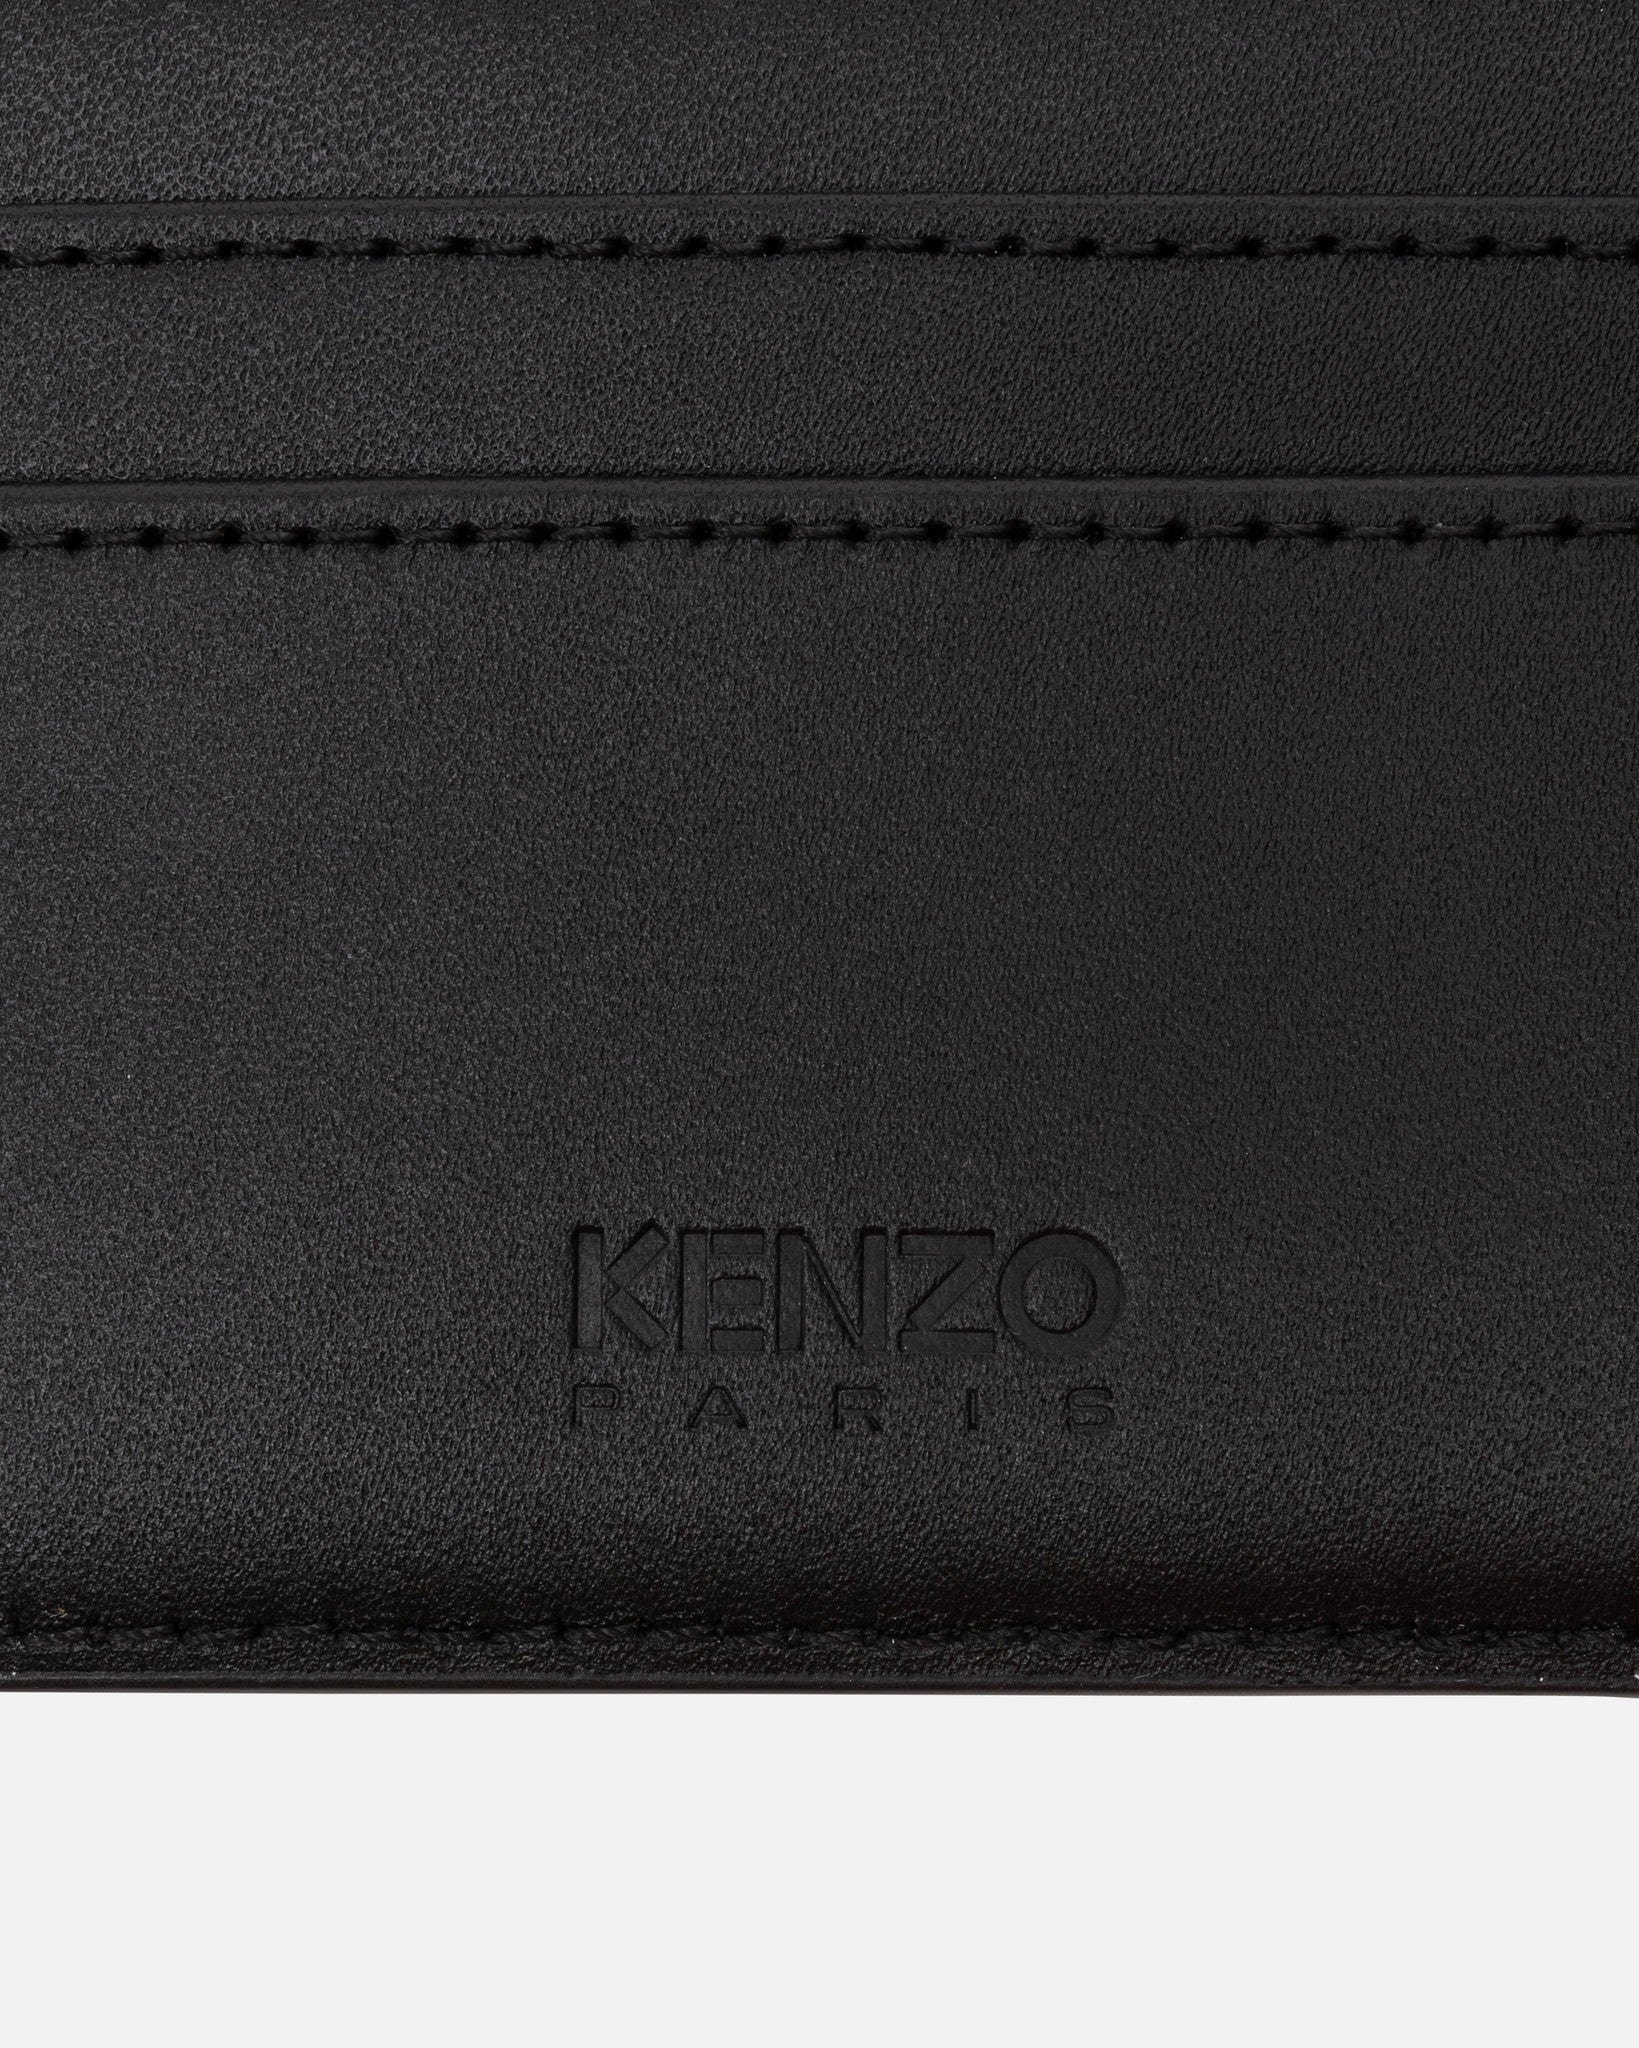 KENZO Leather Goods Target Card Holder in Black